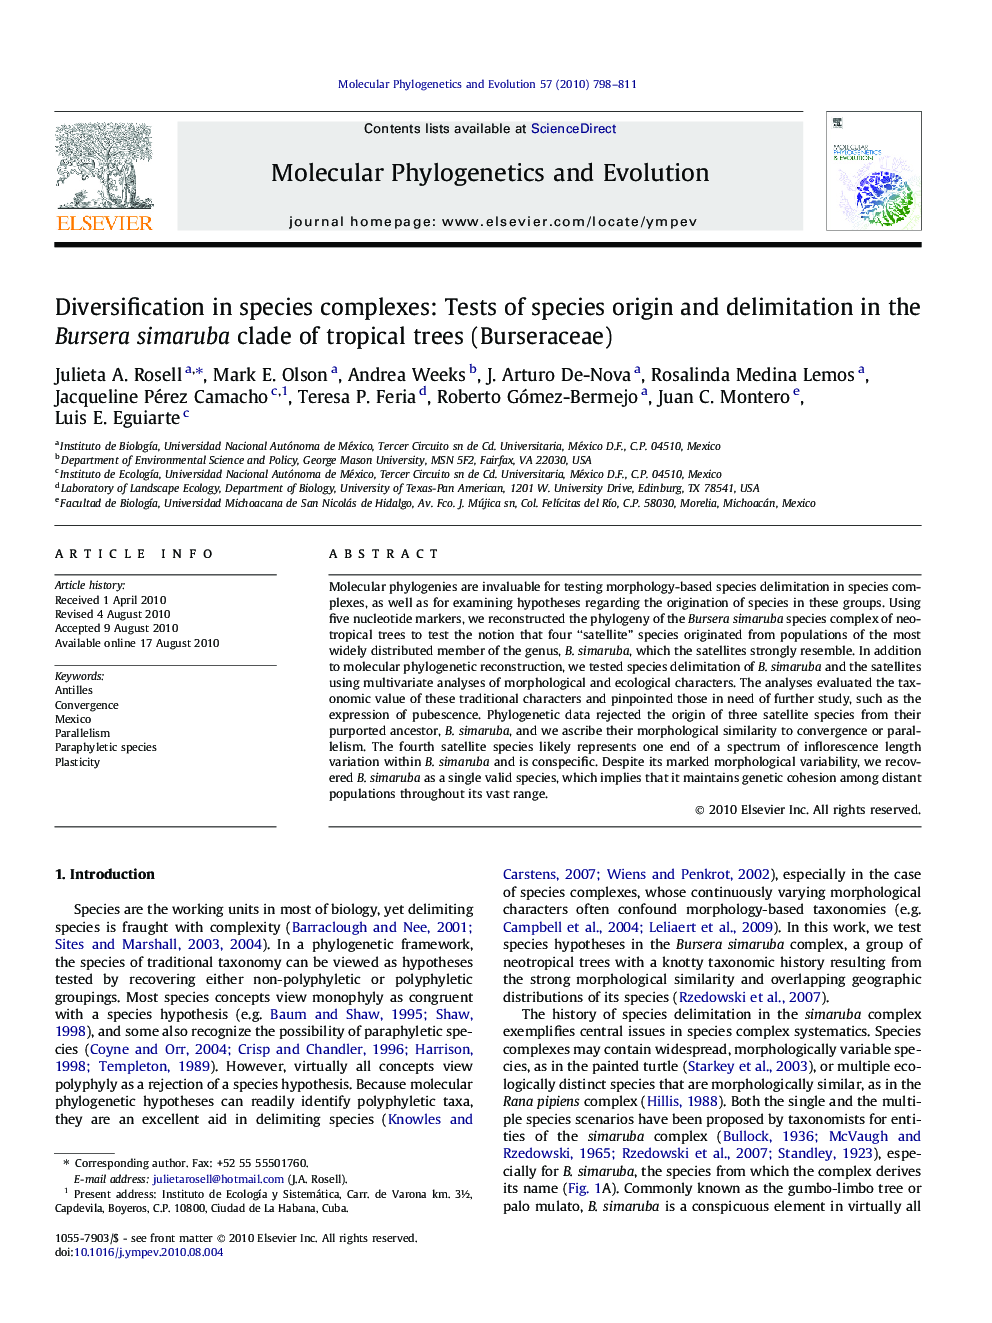 Diversification in species complexes: Tests of species origin and delimitation in the Bursera simaruba clade of tropical trees (Burseraceae)